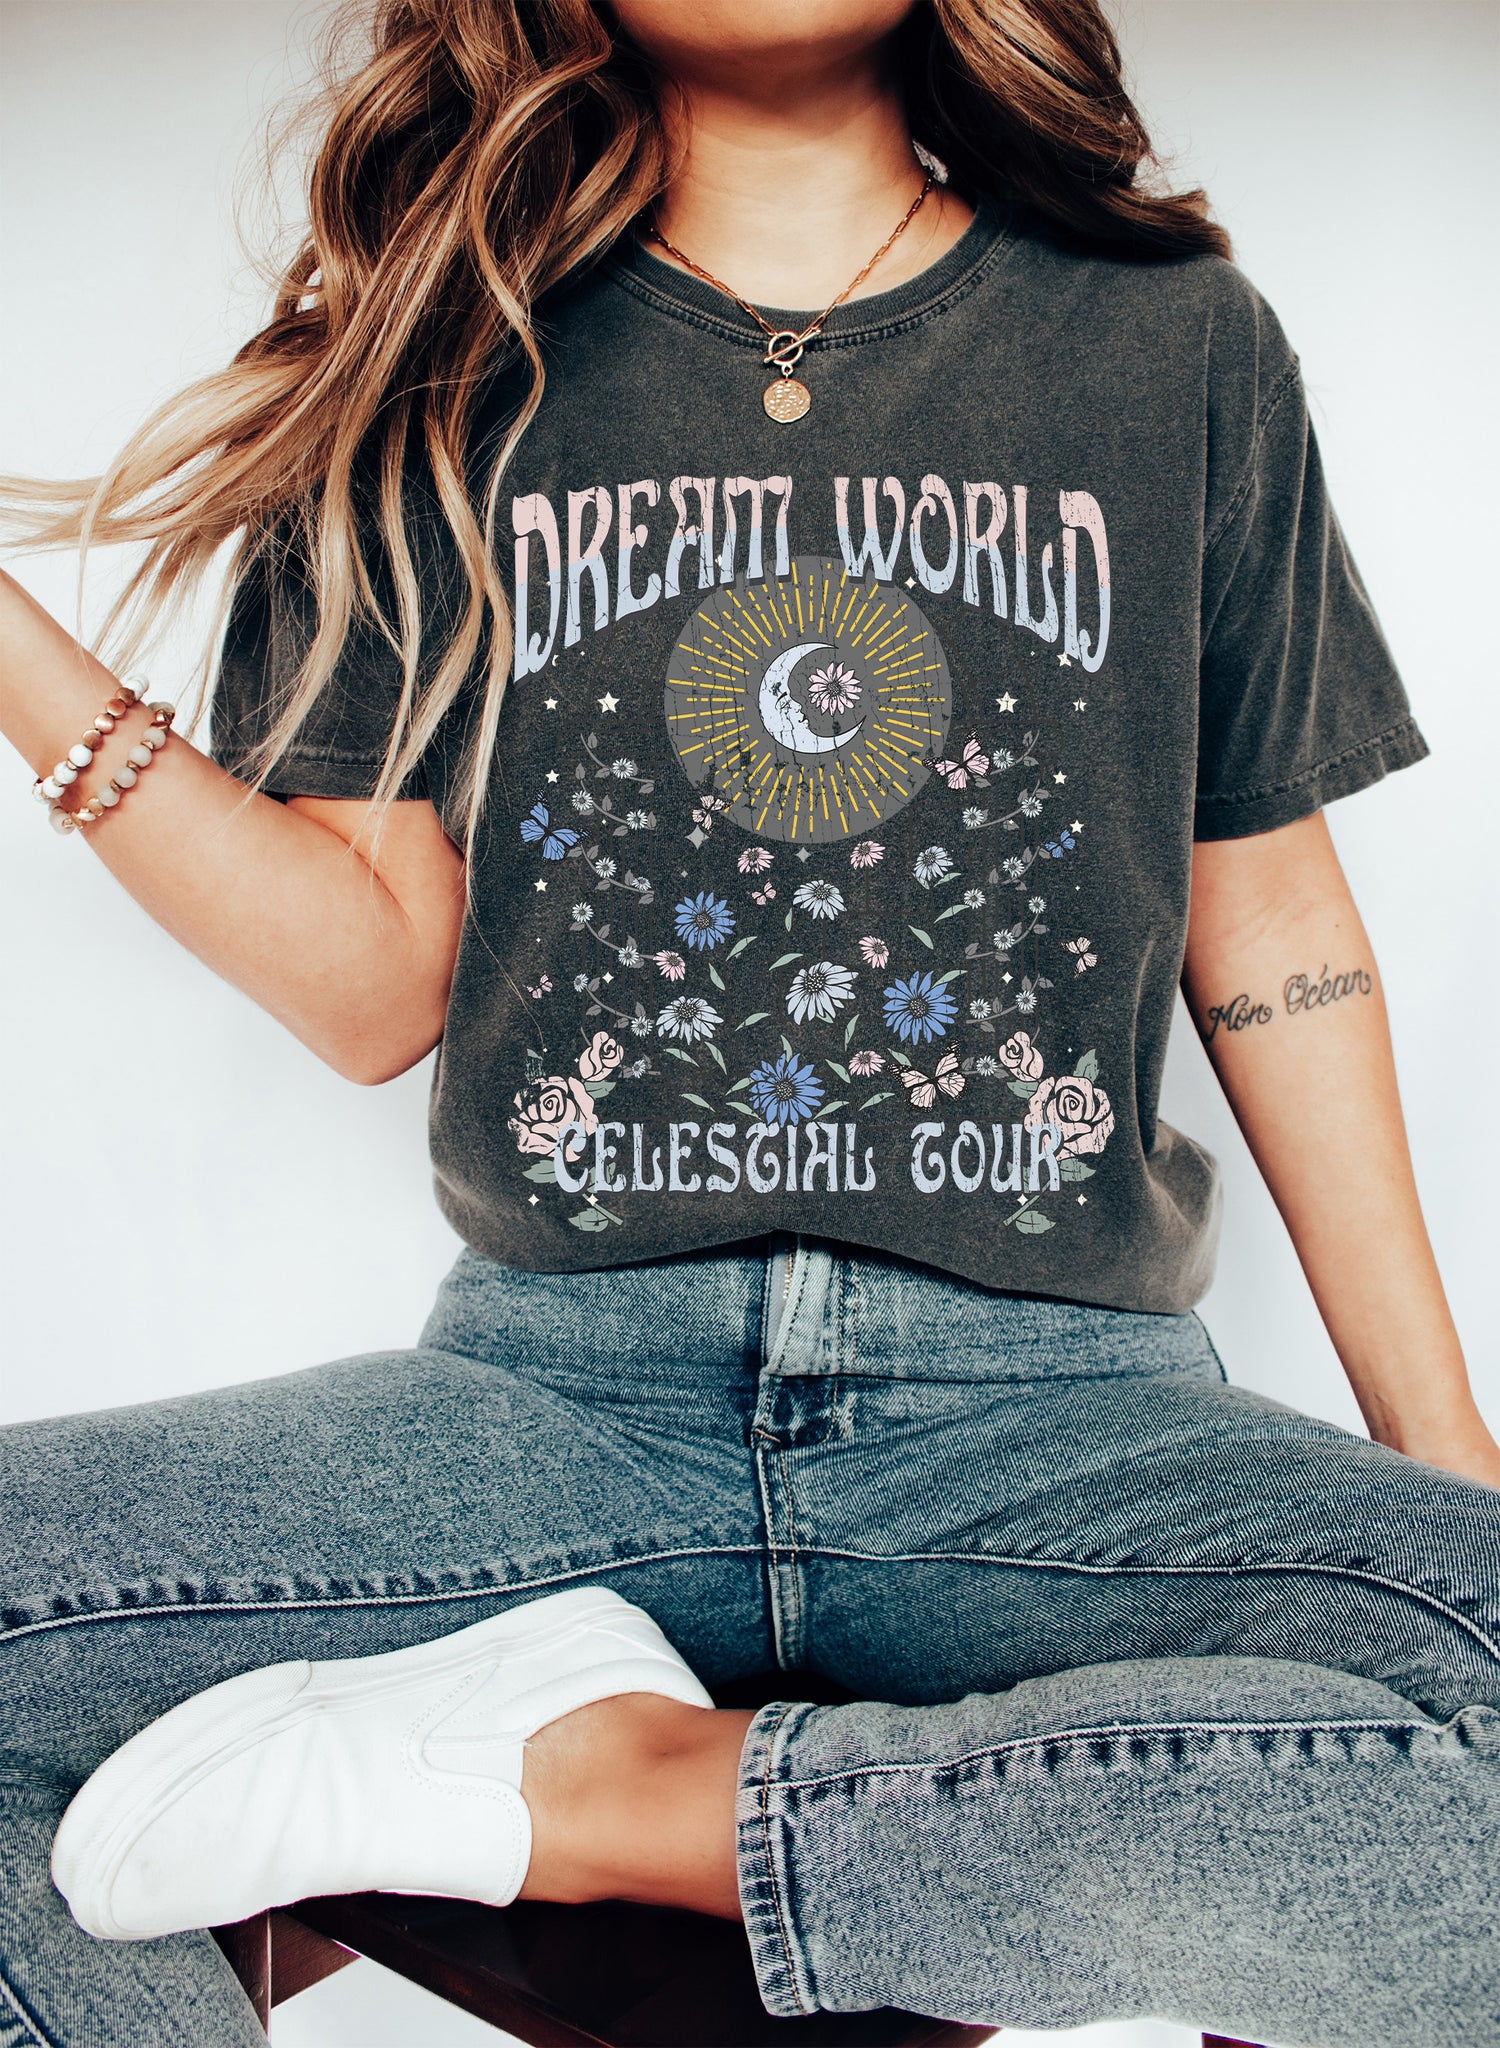 Dream World Celestial Tour T-Shirt